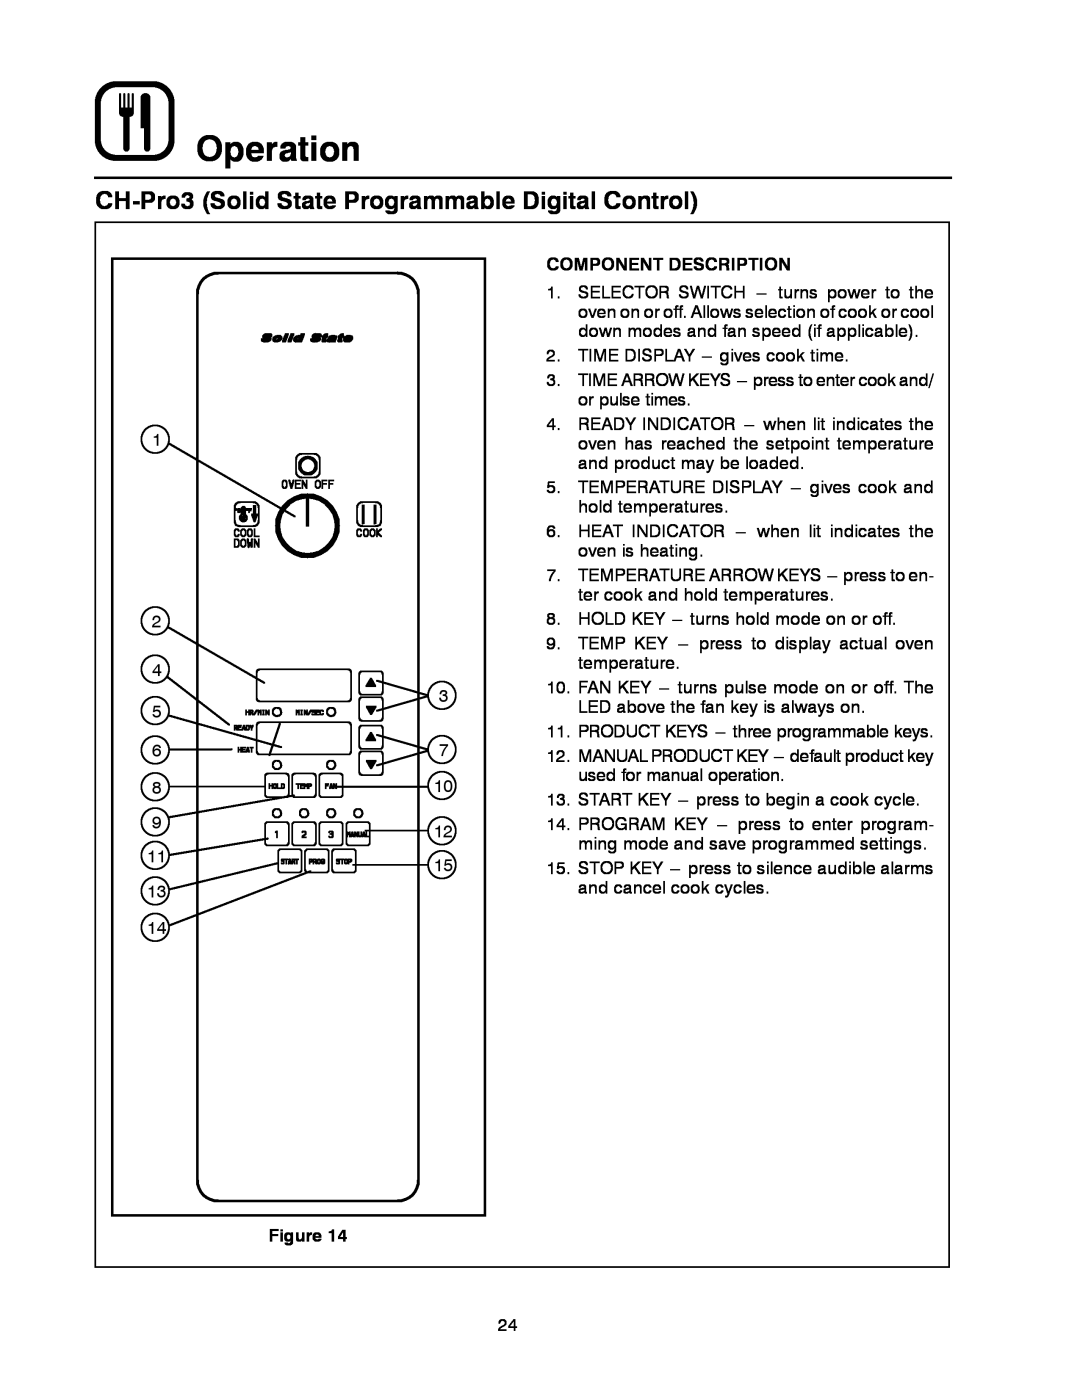 Blodgett DFG-50 manual CH-Pro3 Solid State Programmable Digital Control, Operation, Component Description 